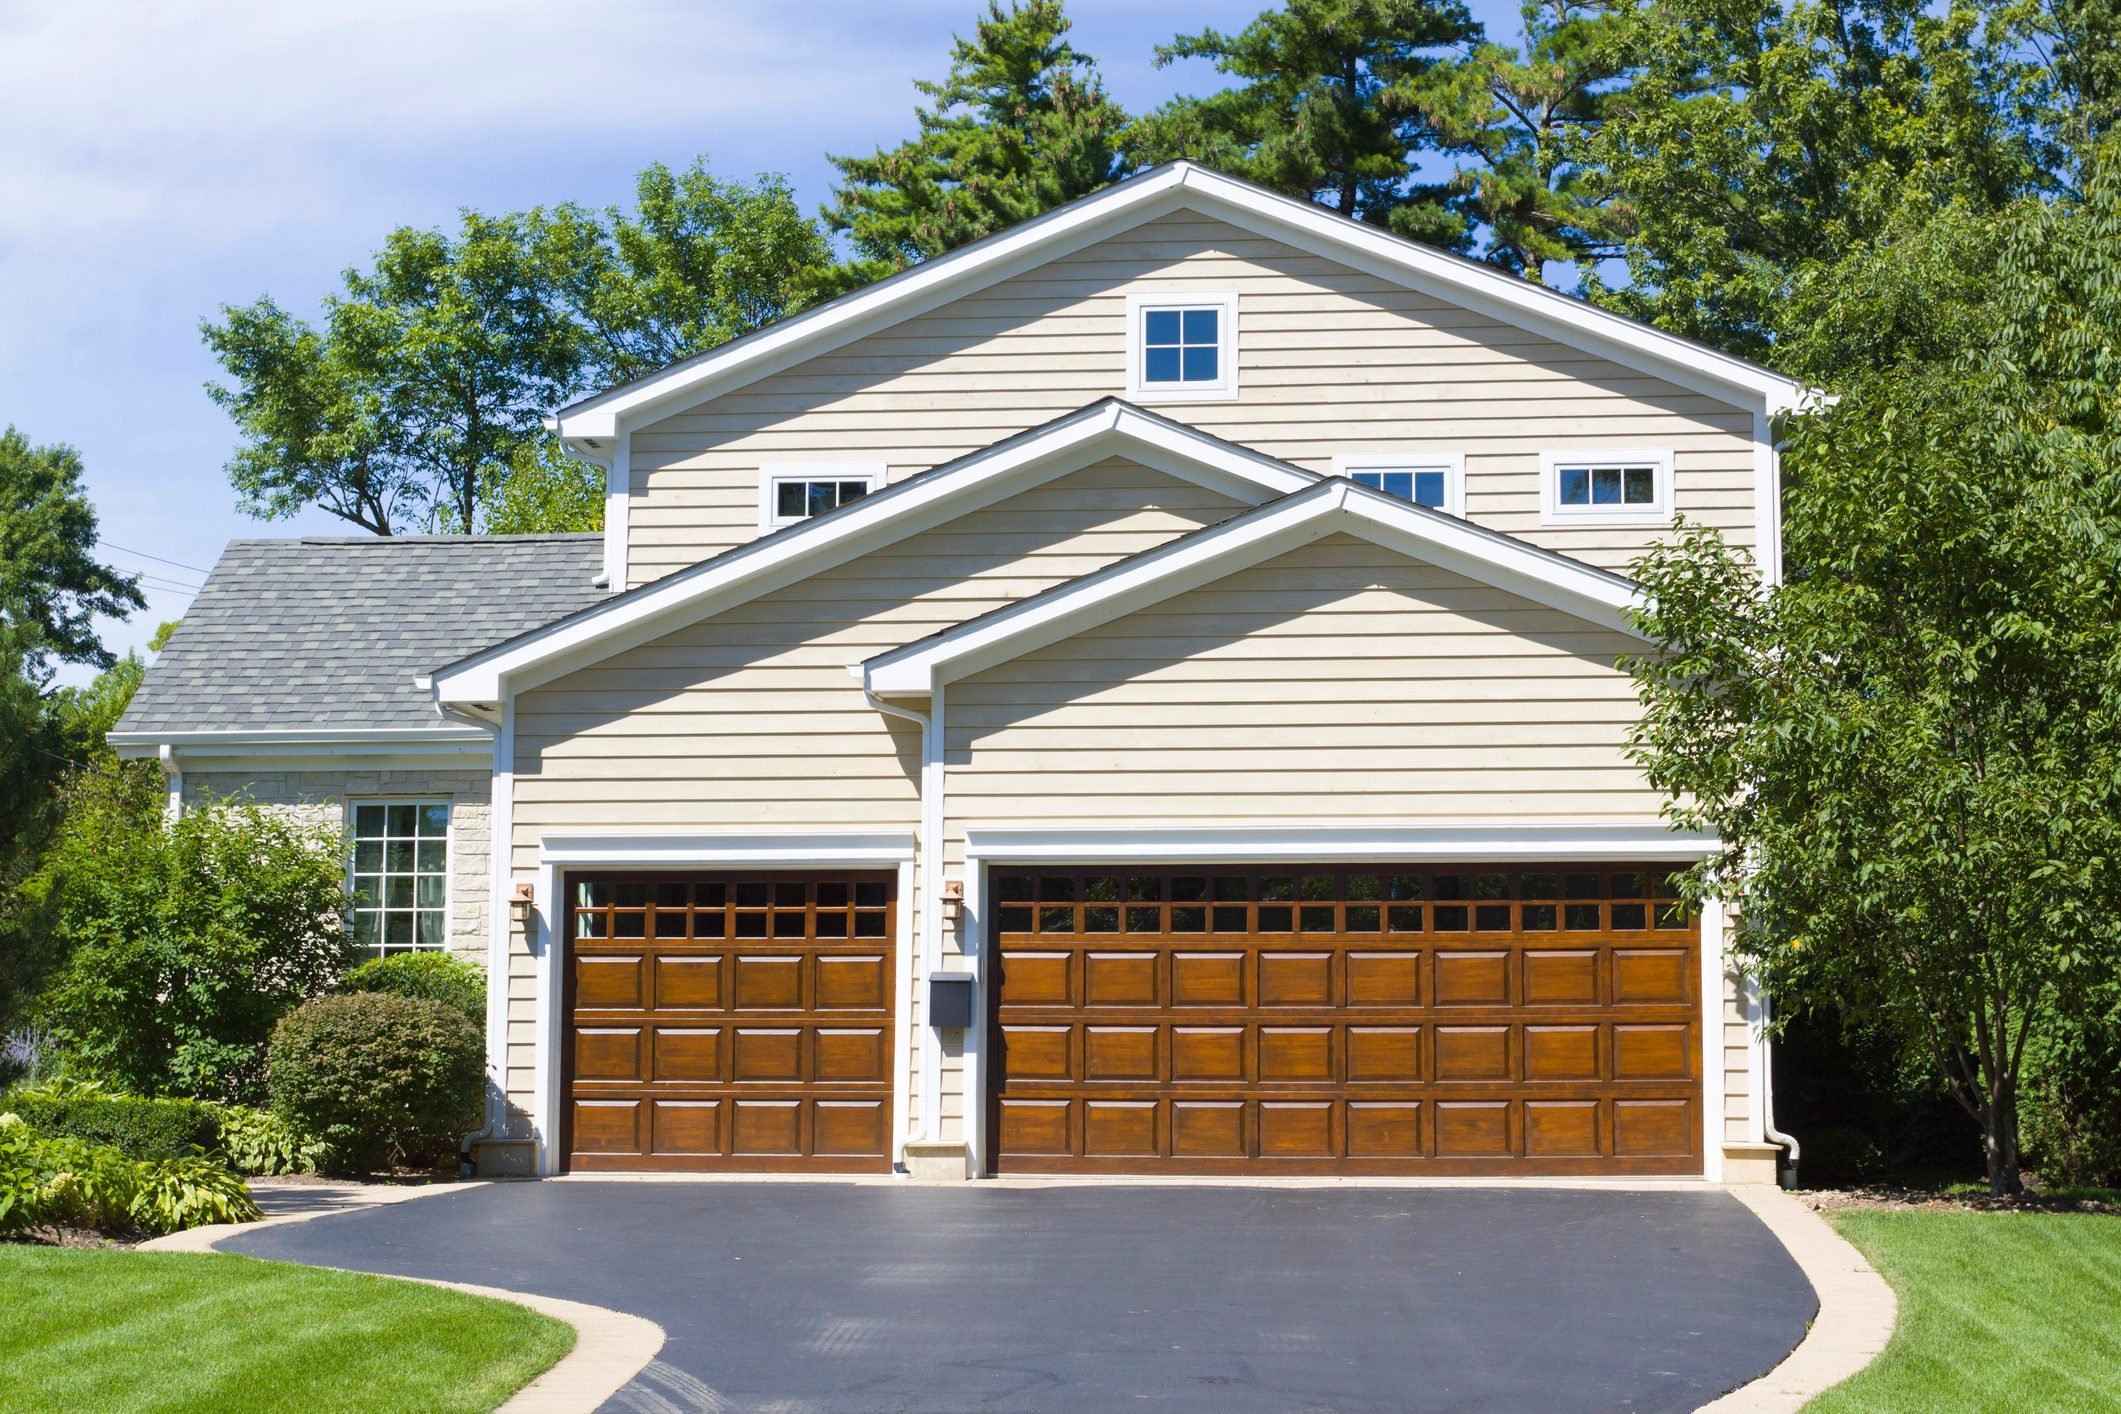 What Are the Standard Garage Door Sizes?